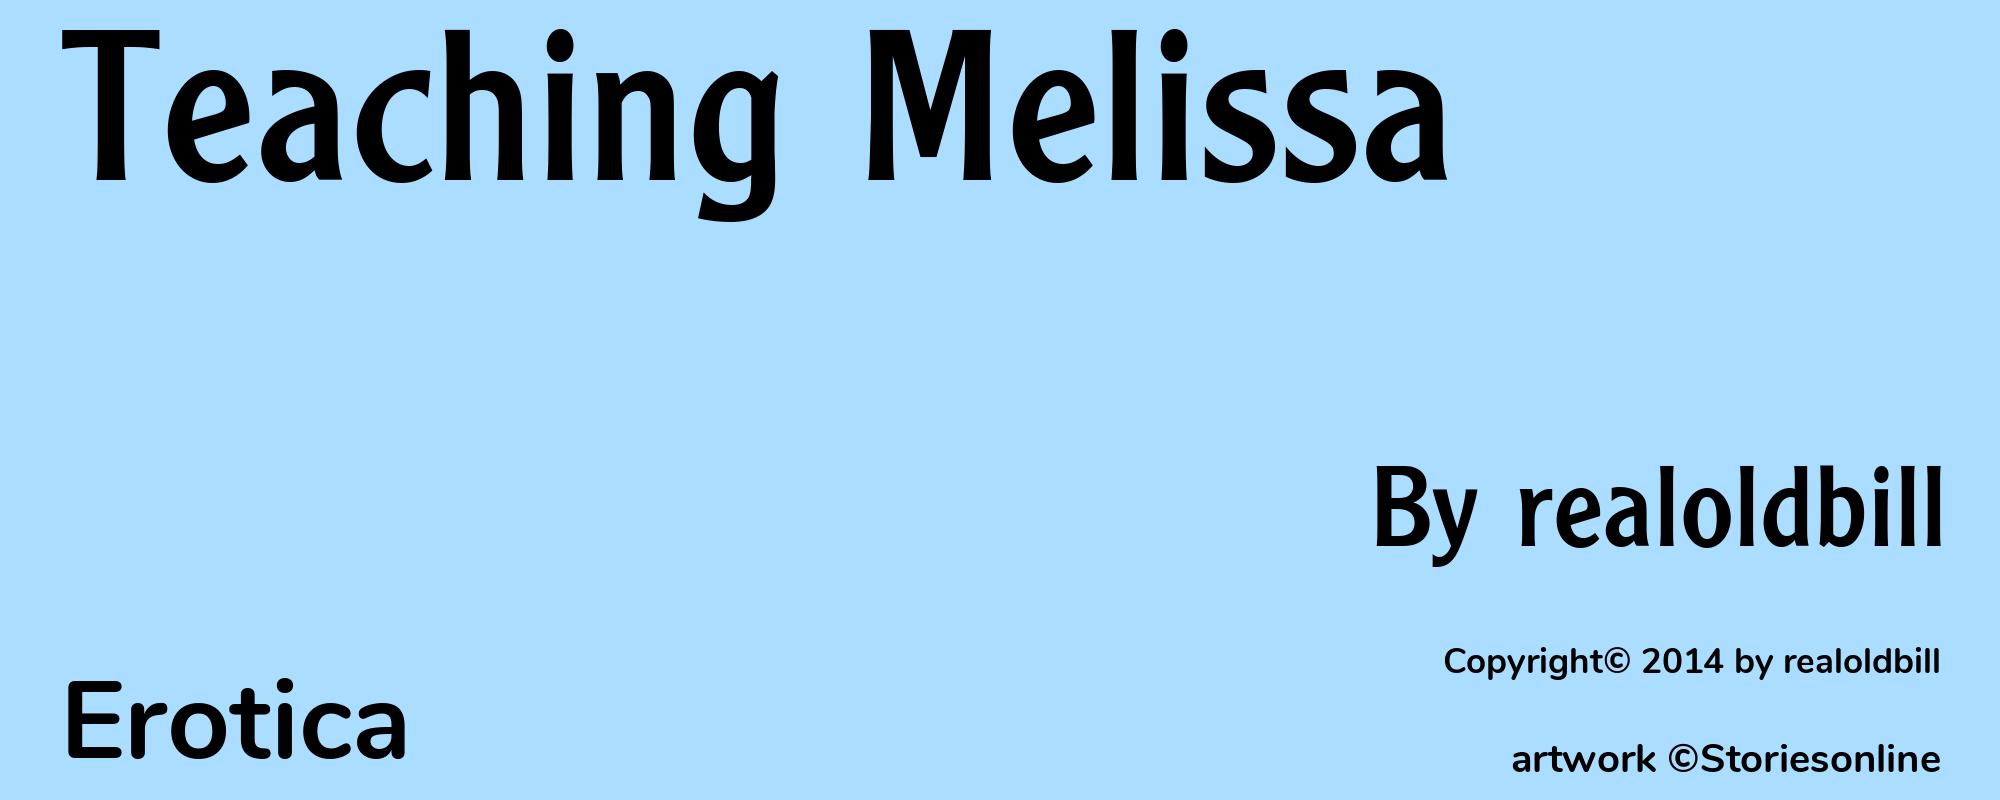 Teaching Melissa - Cover